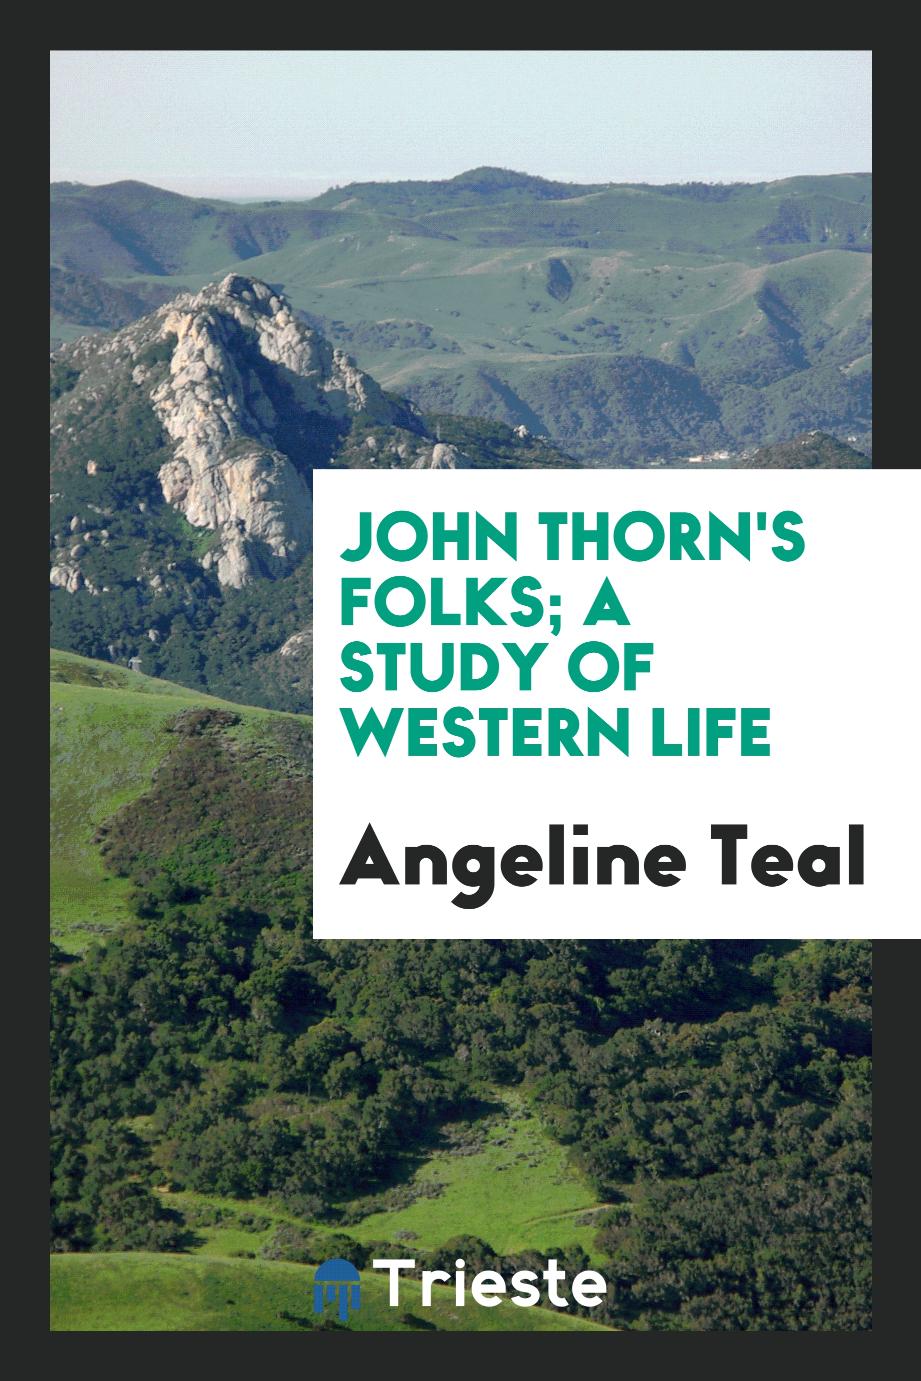 John Thorn's folks; a study of western life